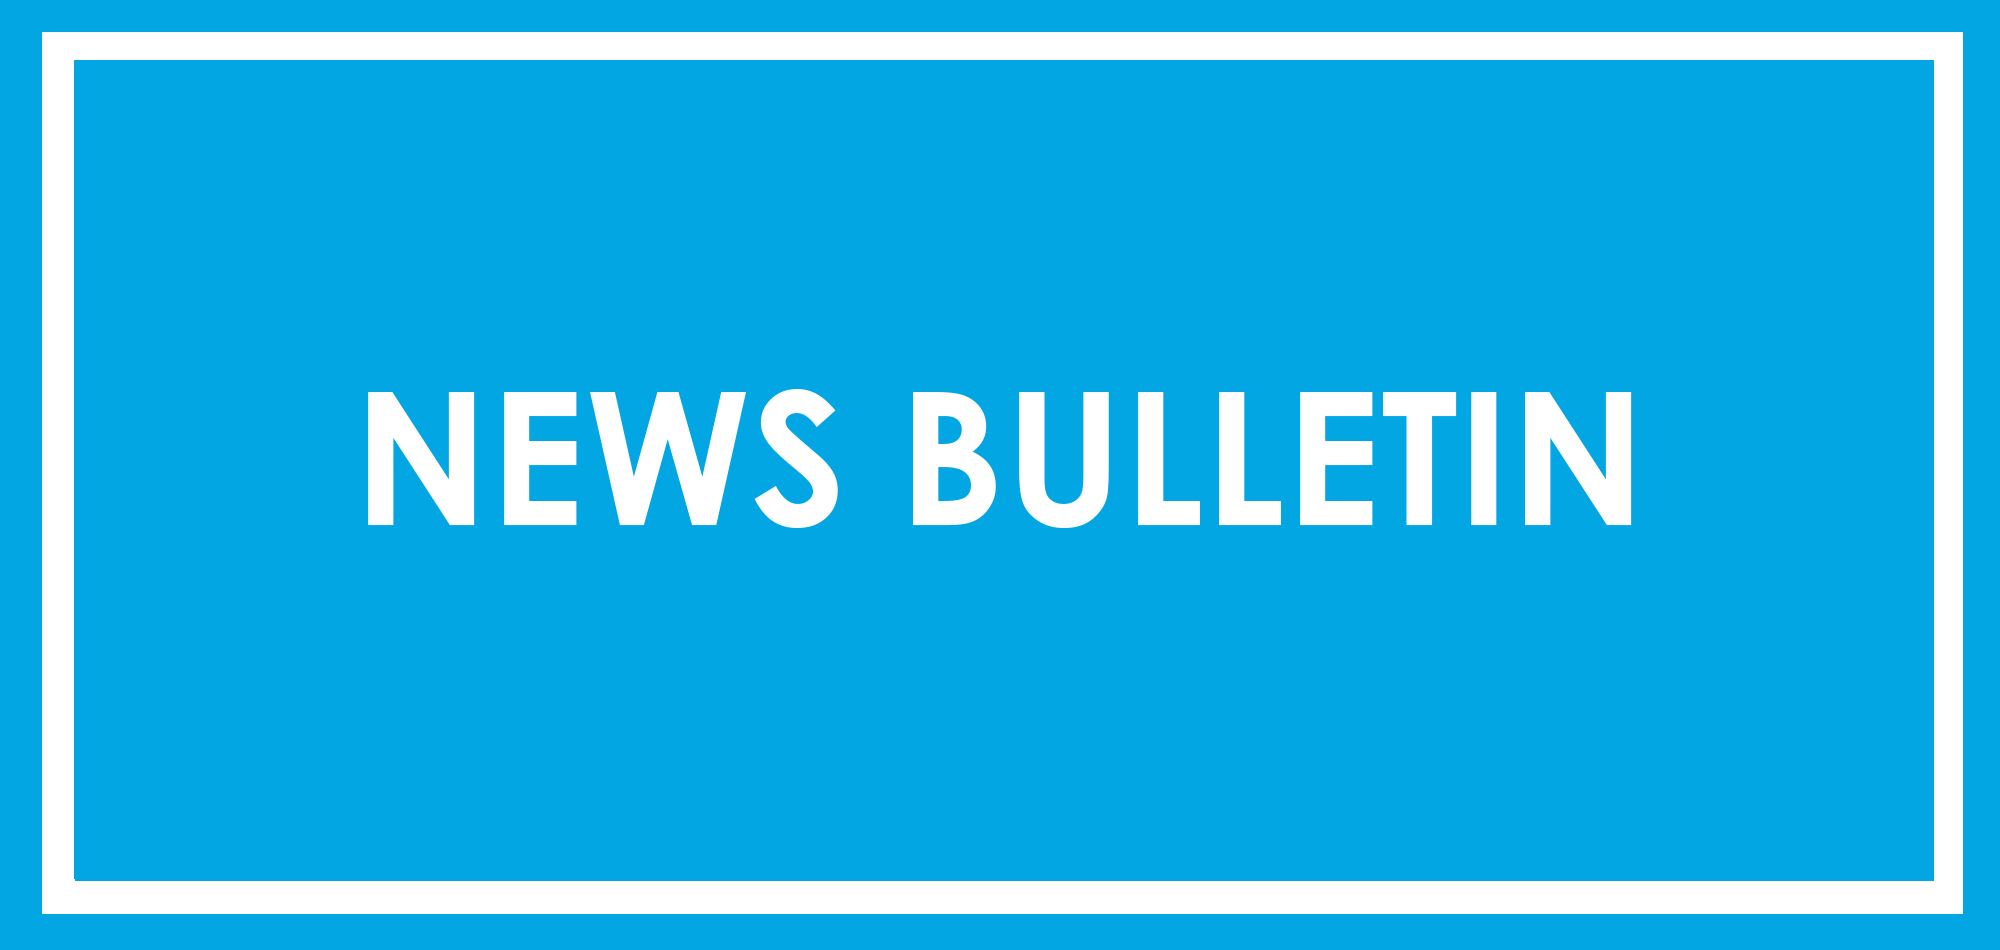 News Bulletin - 24.02.21